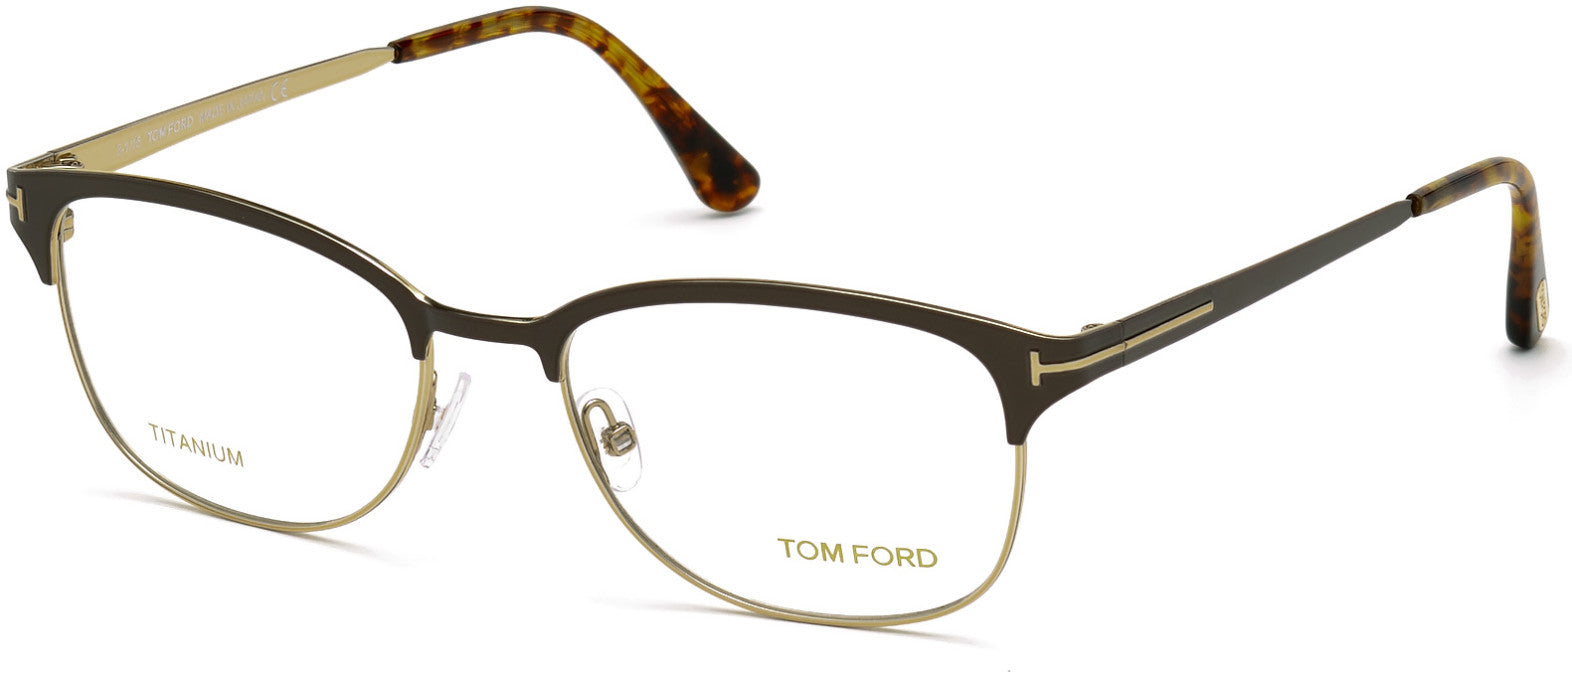 Tom Ford FT5381 Geometric Eyeglasses 050-050 - Brushed Dark Brown, Vintage Havana, Rose Gold